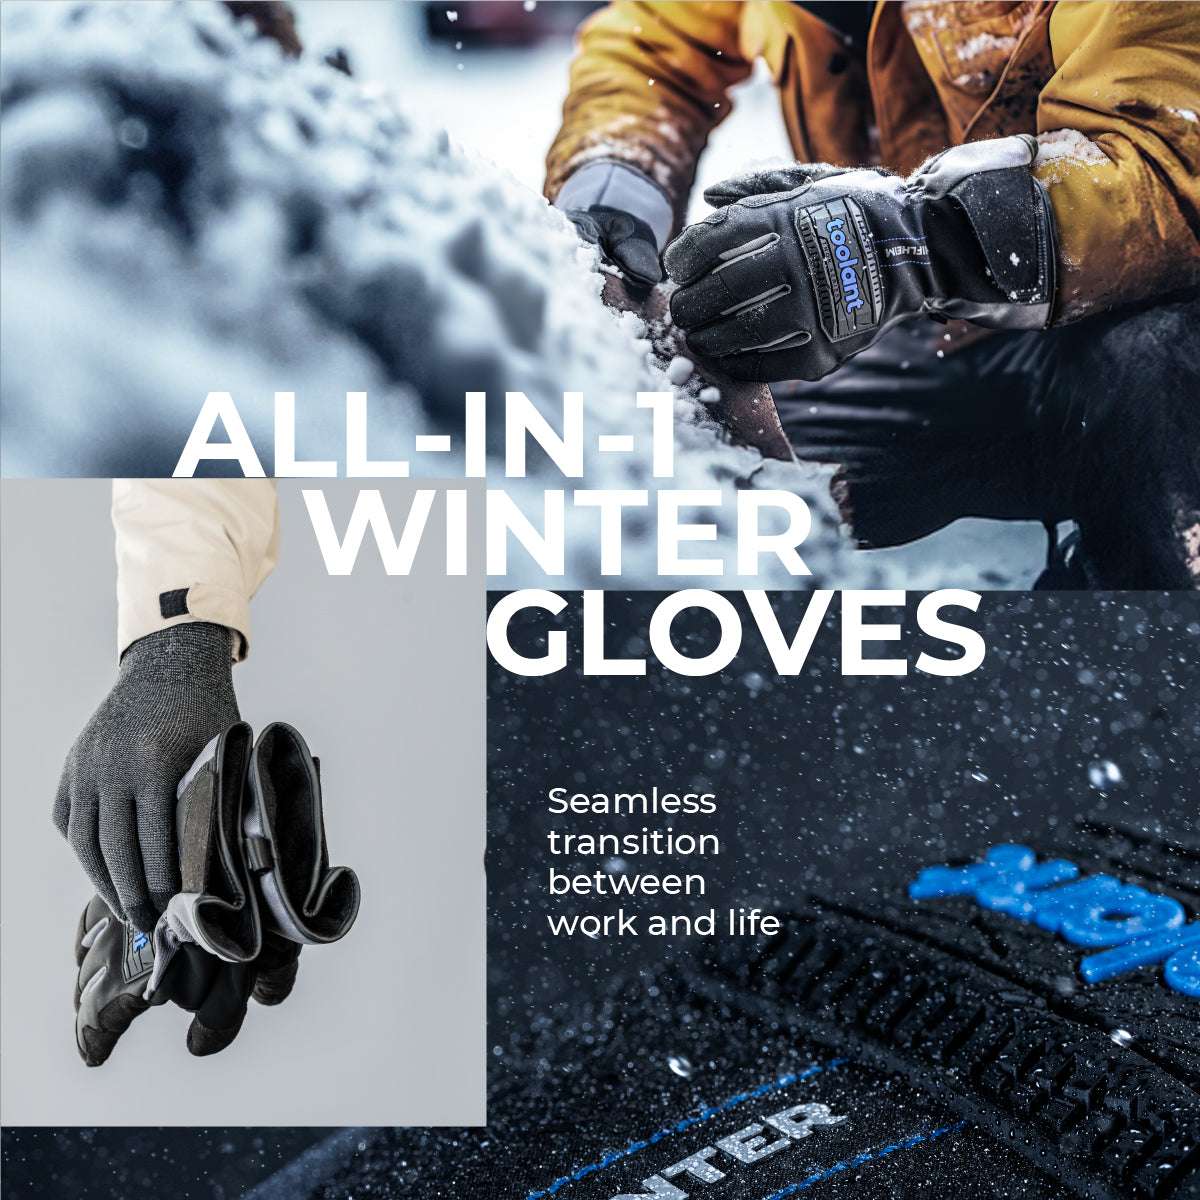  KANGLONGDA Waterproof Winter Work Gloves for Men and